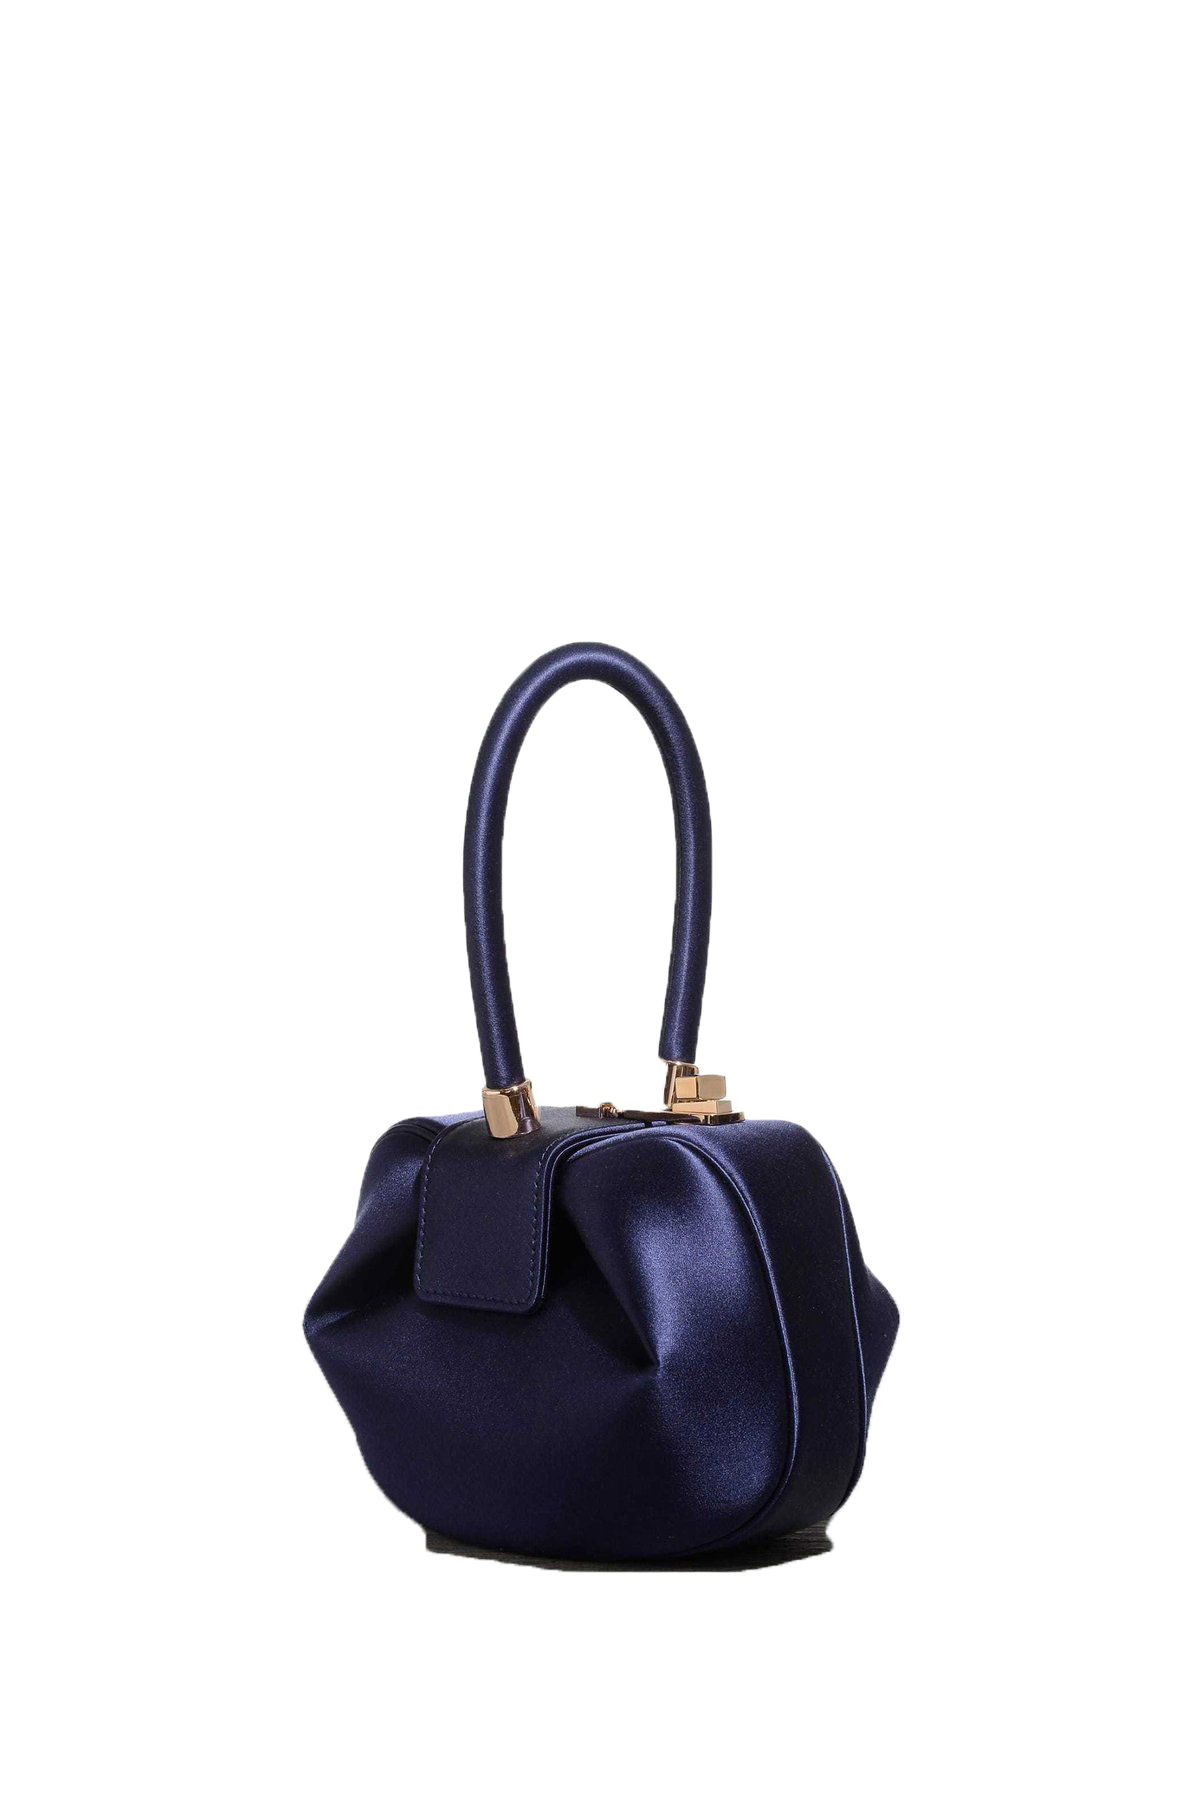 Gabriela Hearst Bag, £1715,